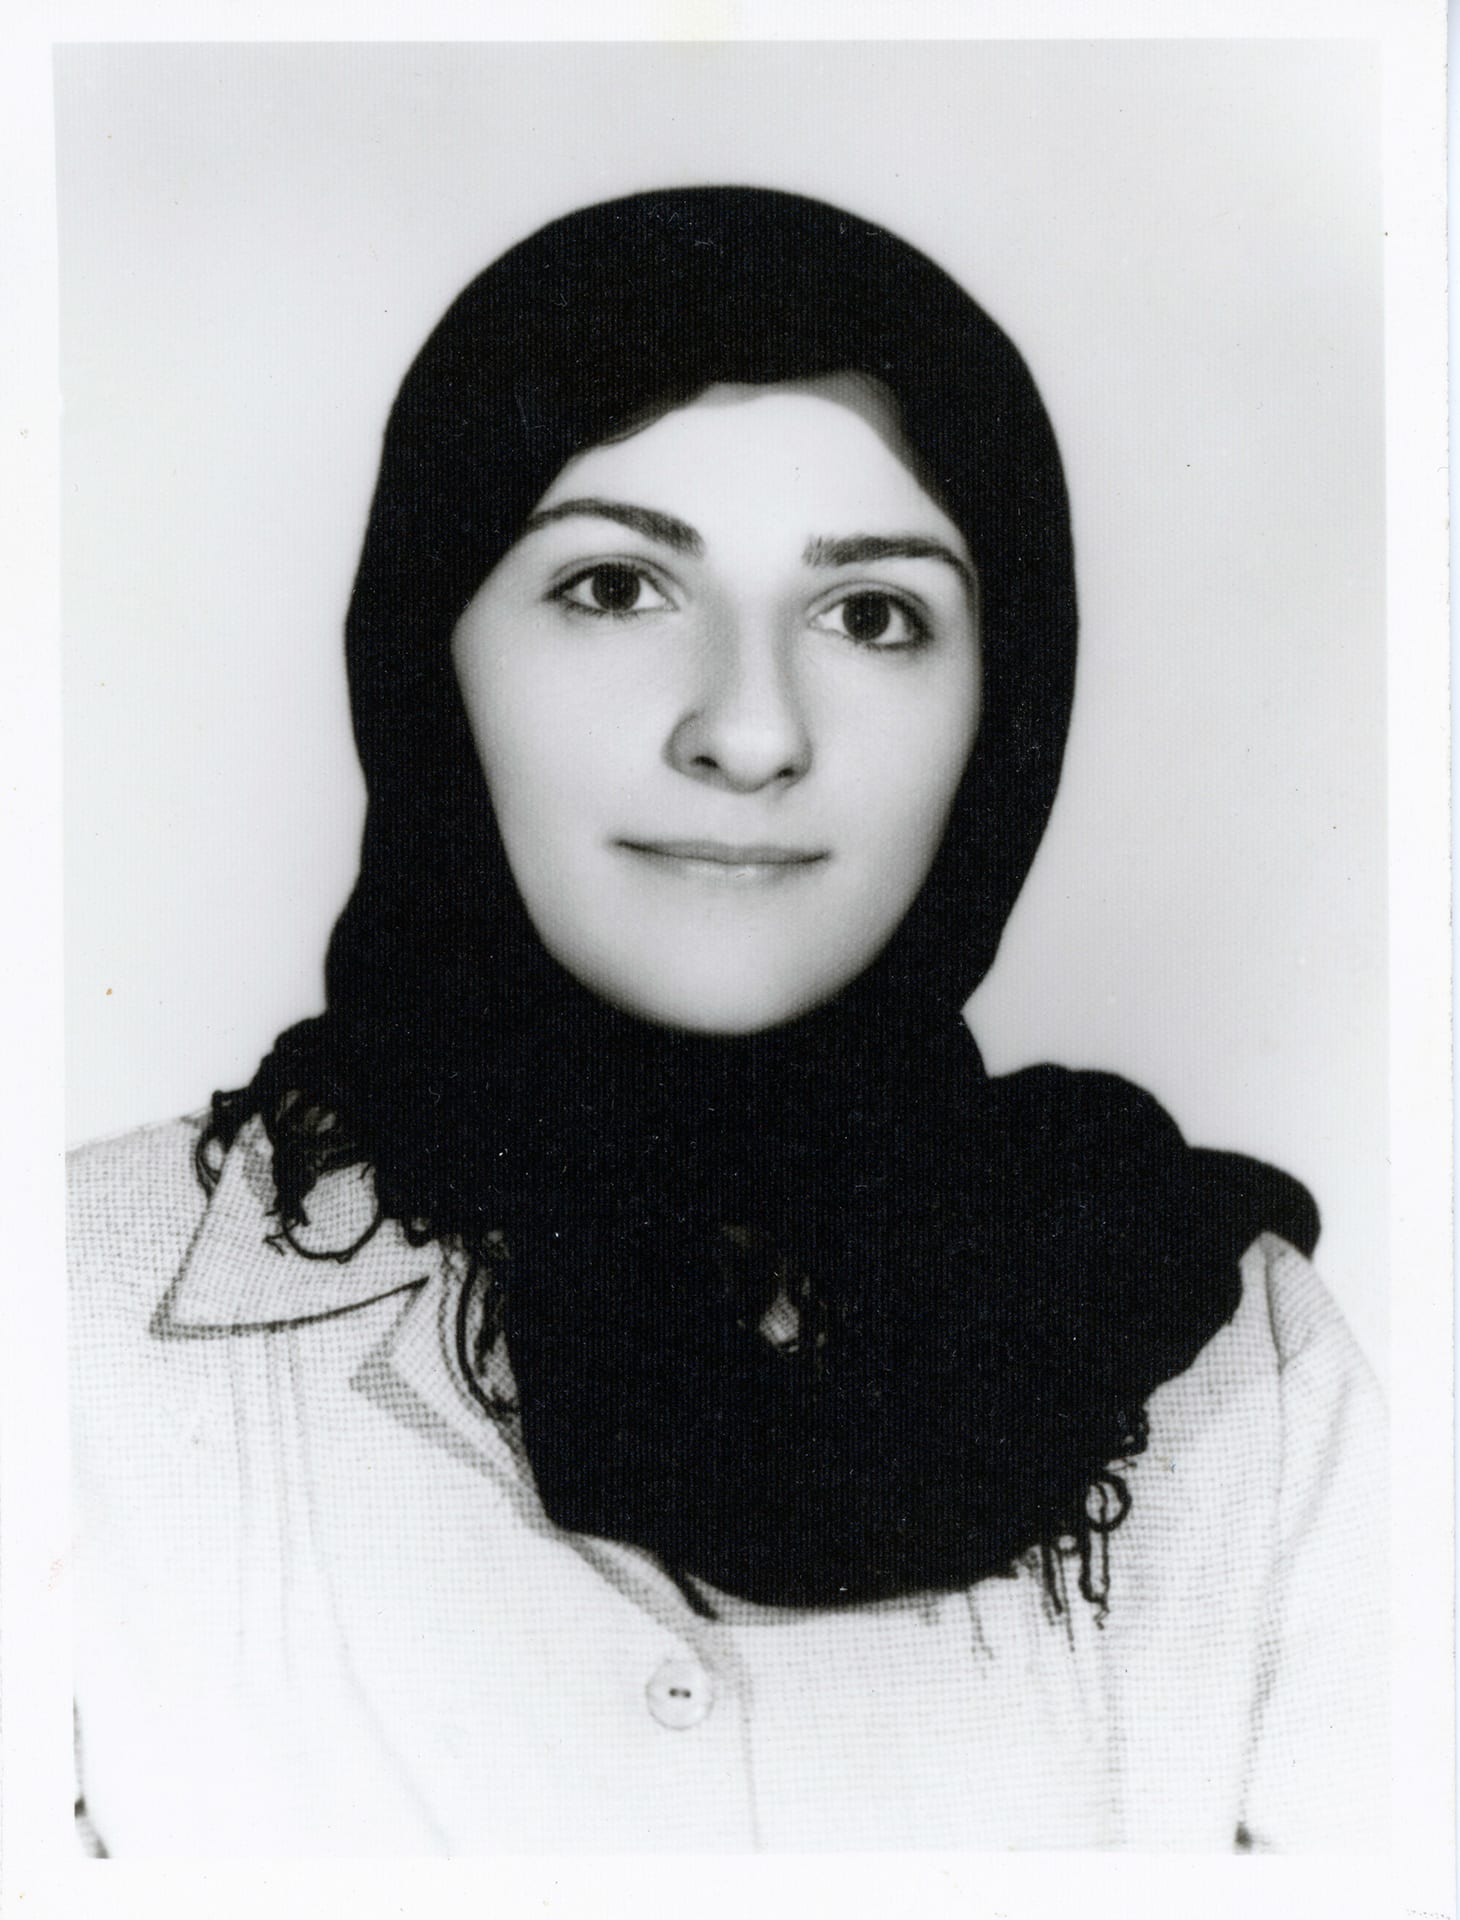 Iranian, revolution, Iran, Chicago, author, hijab, miniskirt